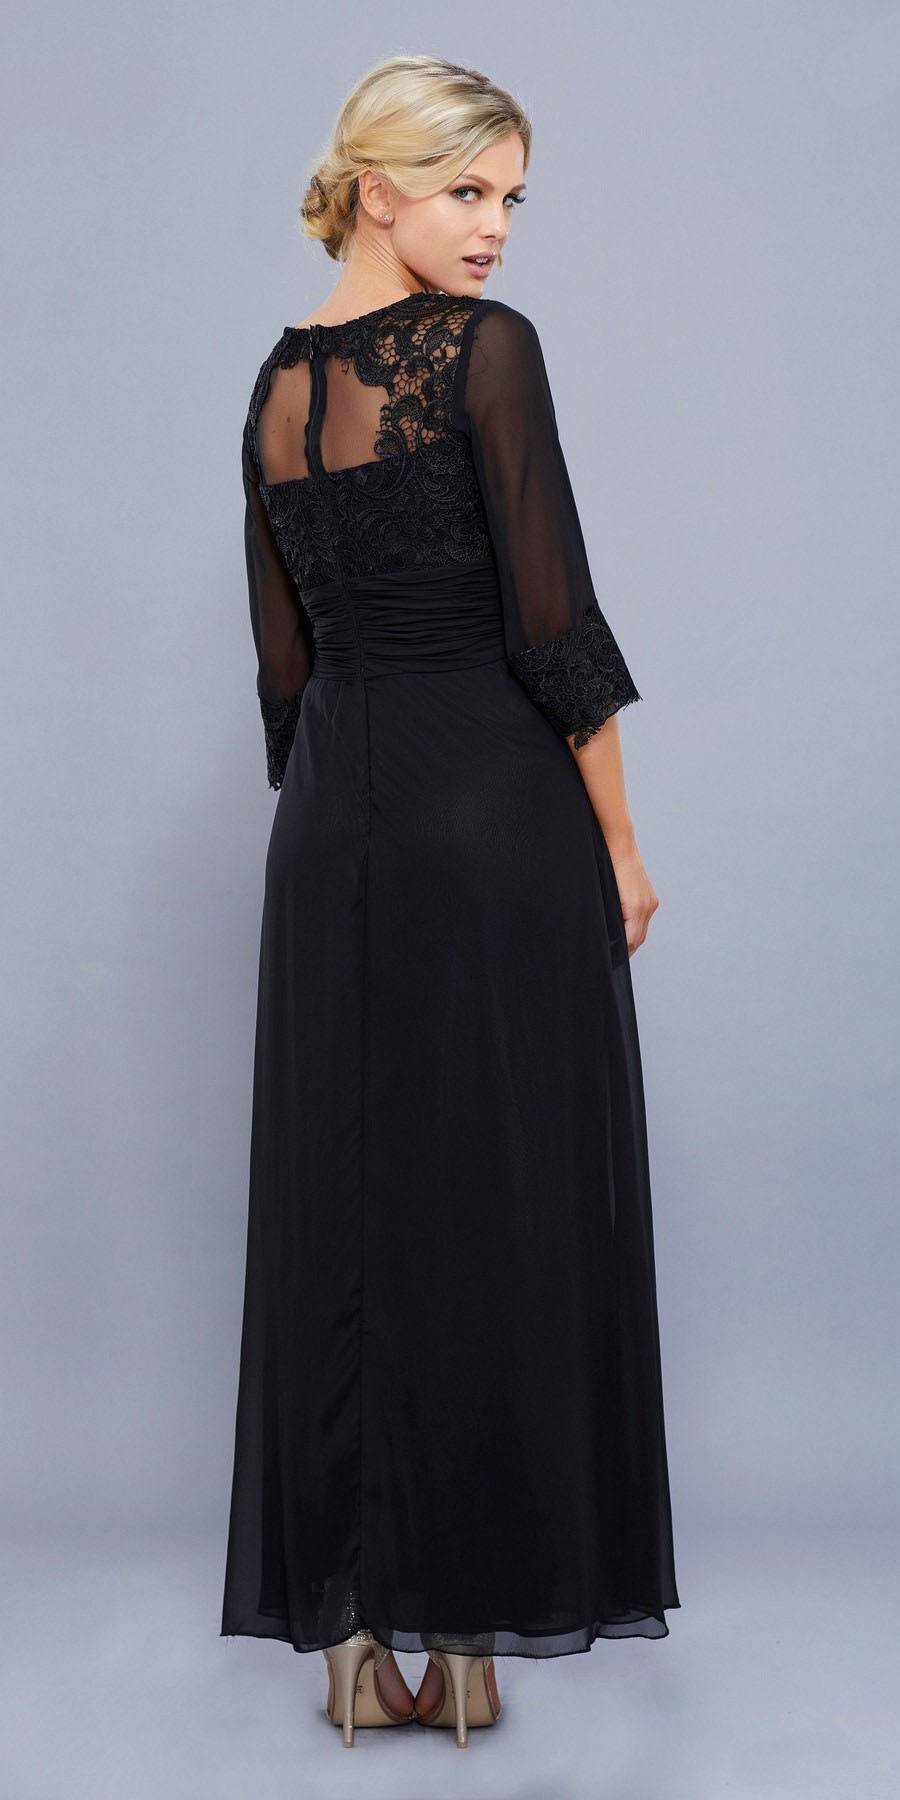 Nox Anabel - 5101 Quarter Length Sleeve Empire Long Formal Dress Special Occasion Dress